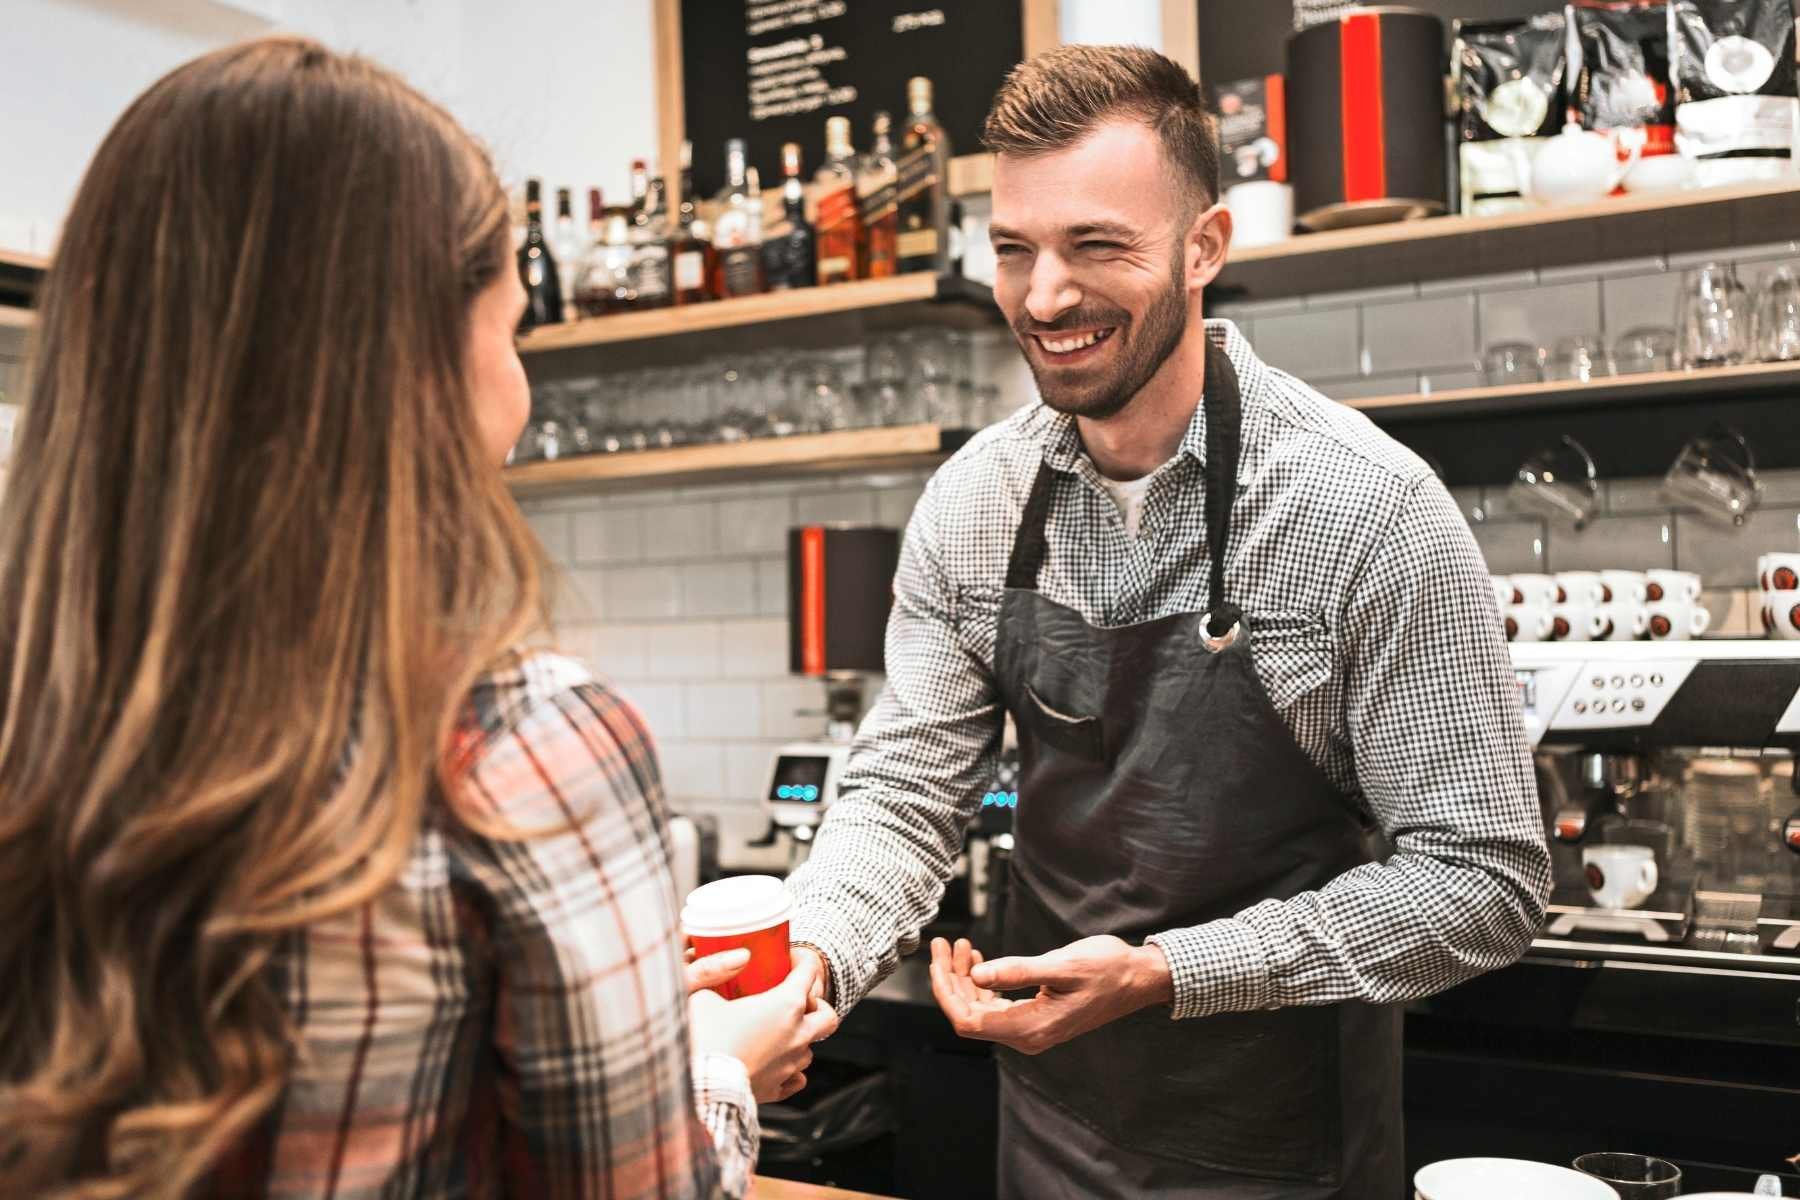 Customer collecting free coffee as a reward for customer loyalty